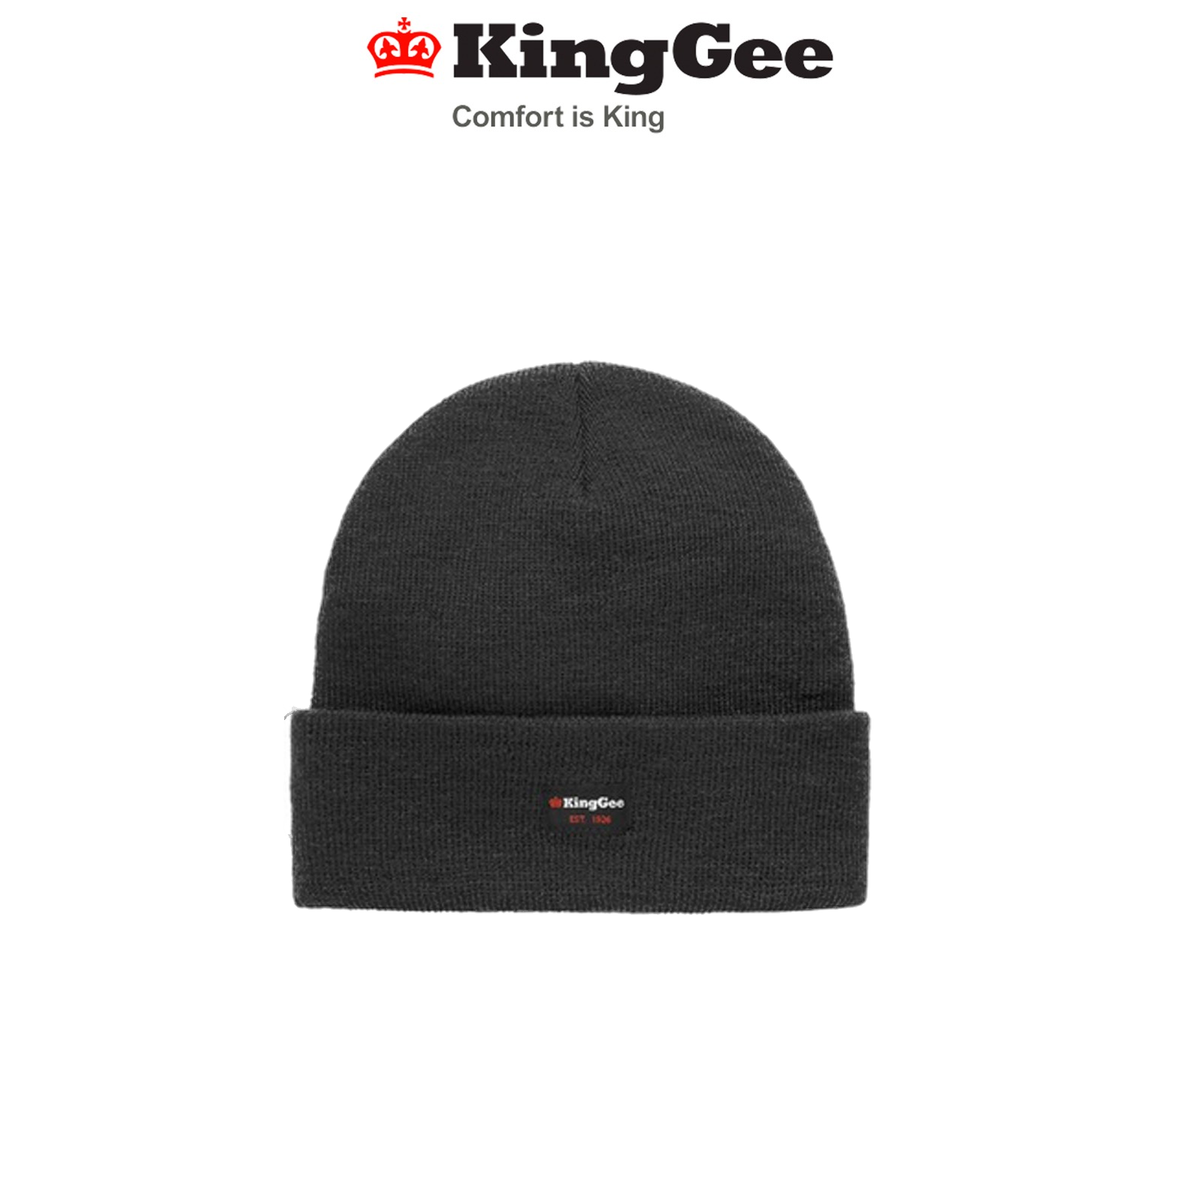 kinggee mens tradies beanie warm comfortable winter hat classic workwear  k61228